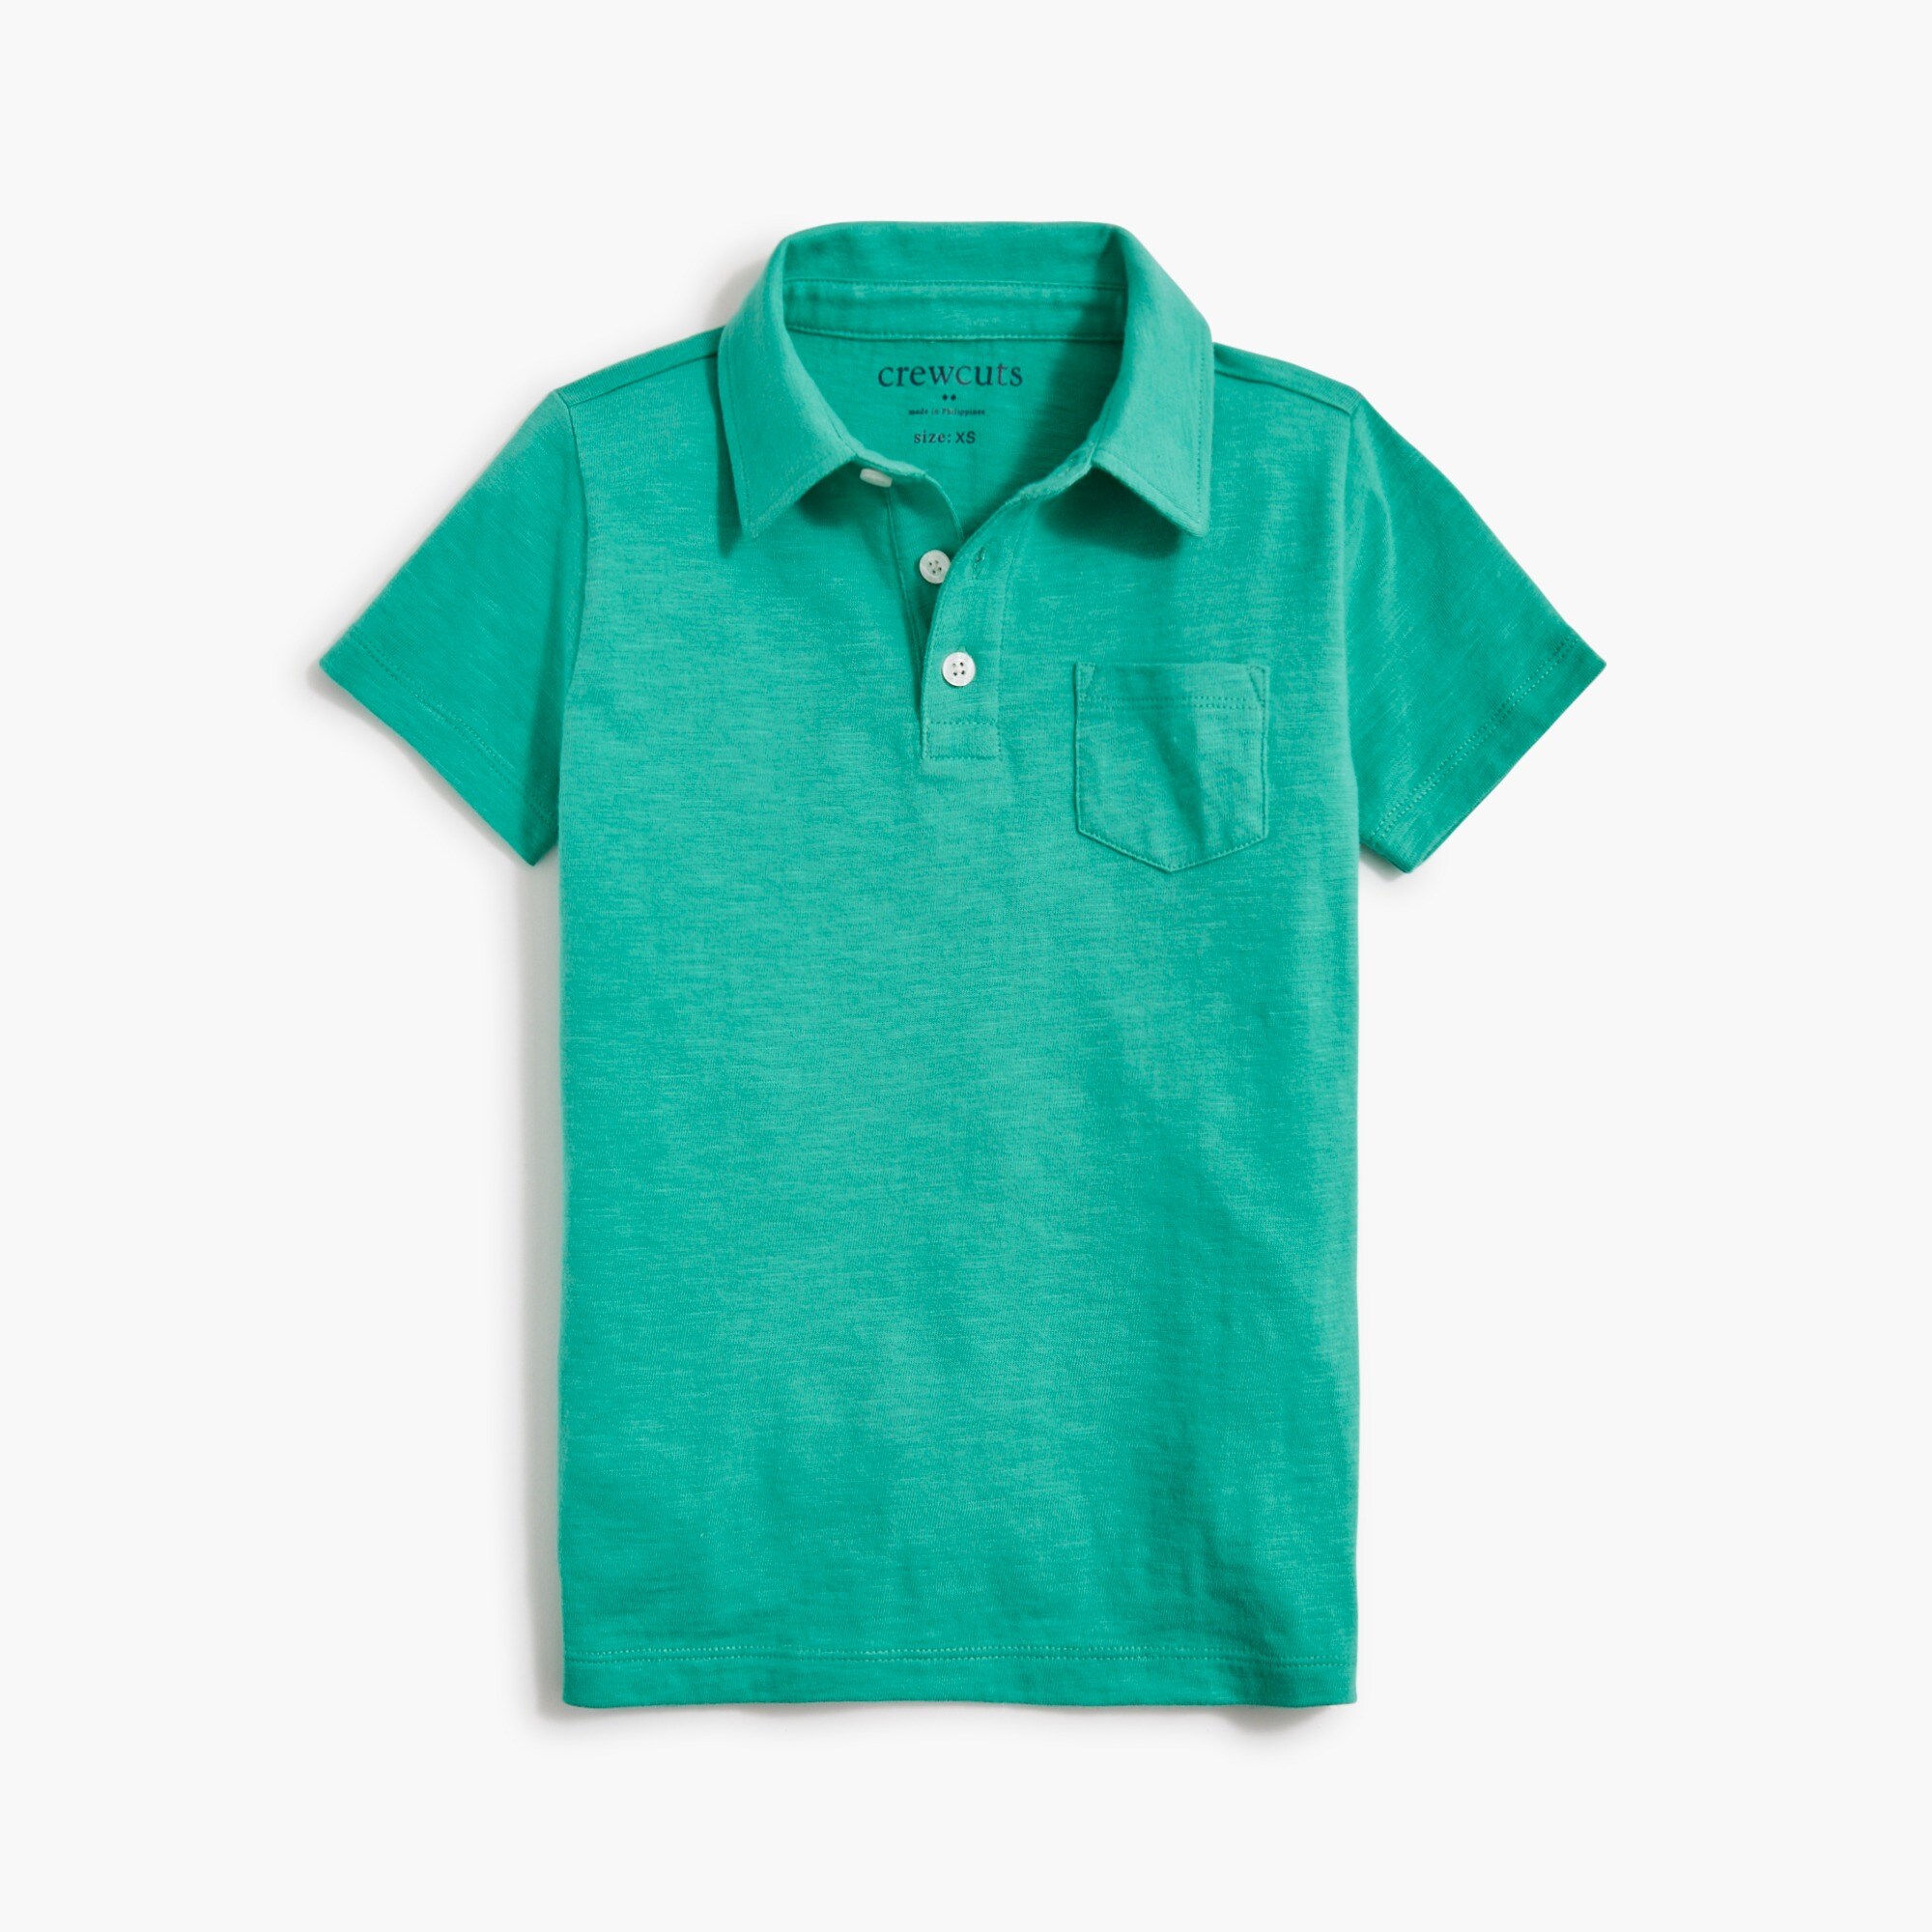  Kids' cotton slub polo shirt